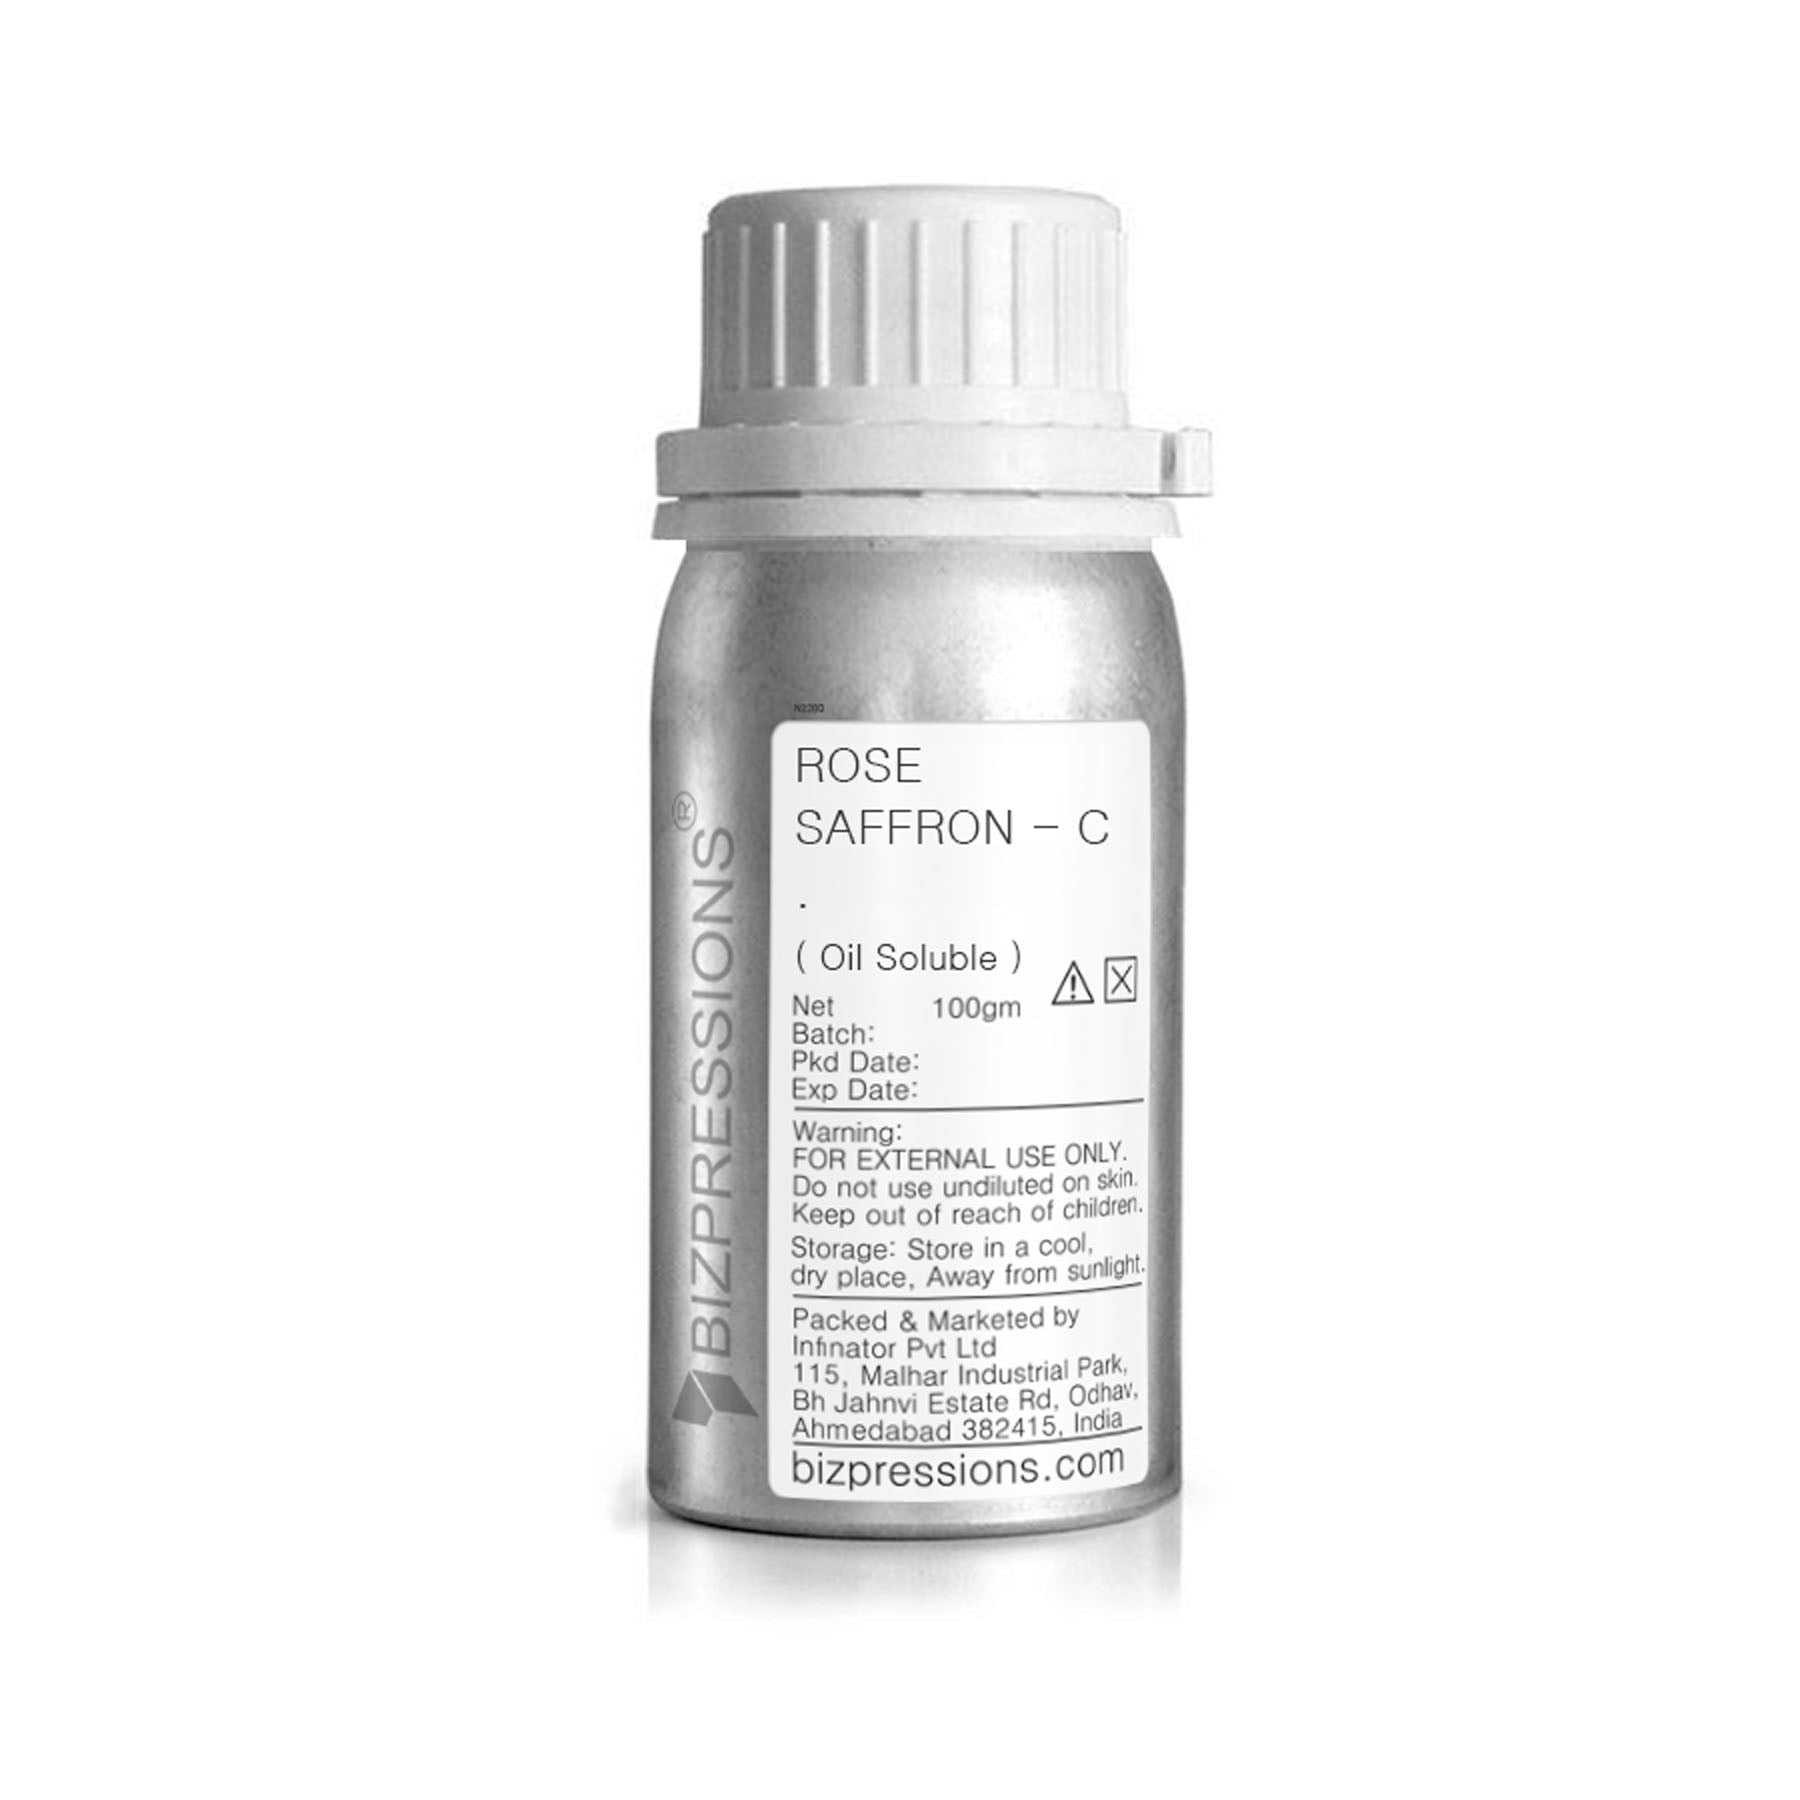 ROSE SAFFRON - C - Fragrance ( Oil Soluble ) - 100 gm